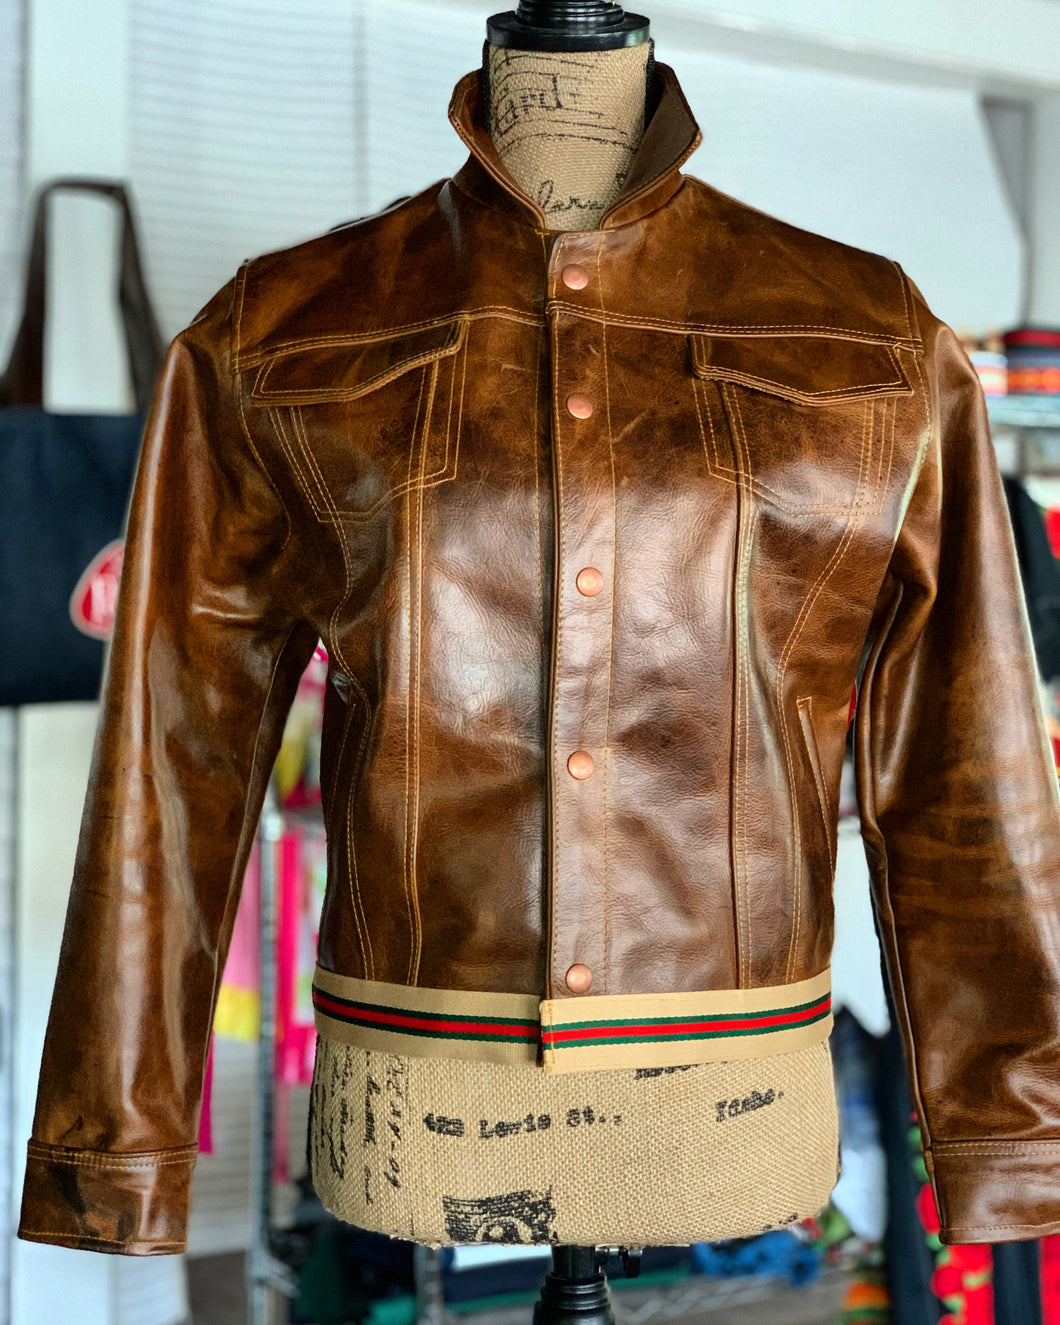 The “wanderer” 100% leather jacket